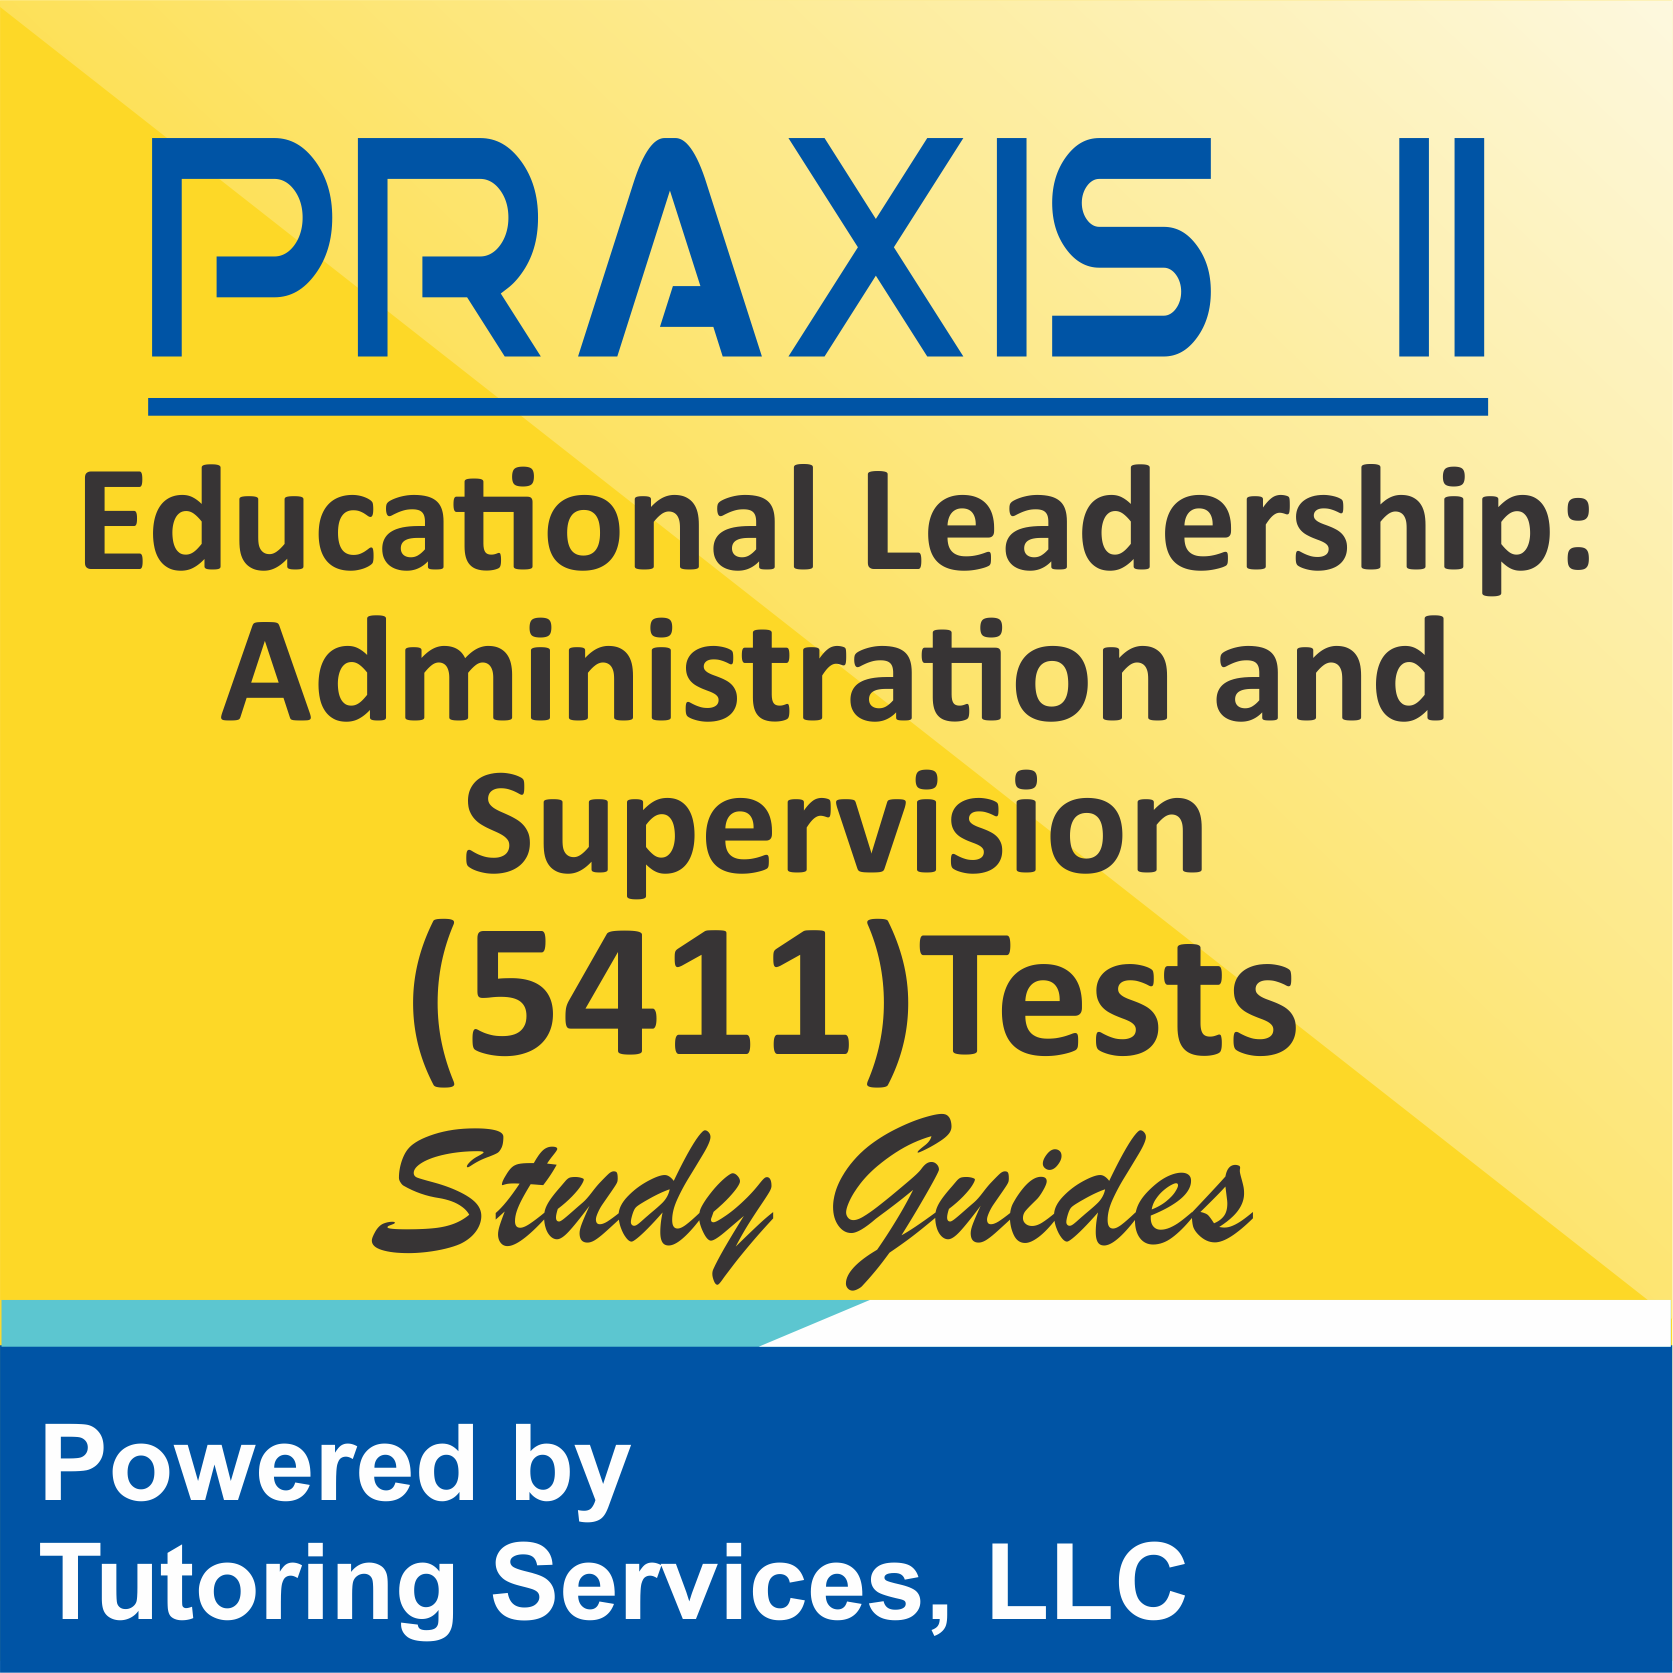 Praxis II Educational Leadership: Administration and Supervision (5411) Examination Syllabus